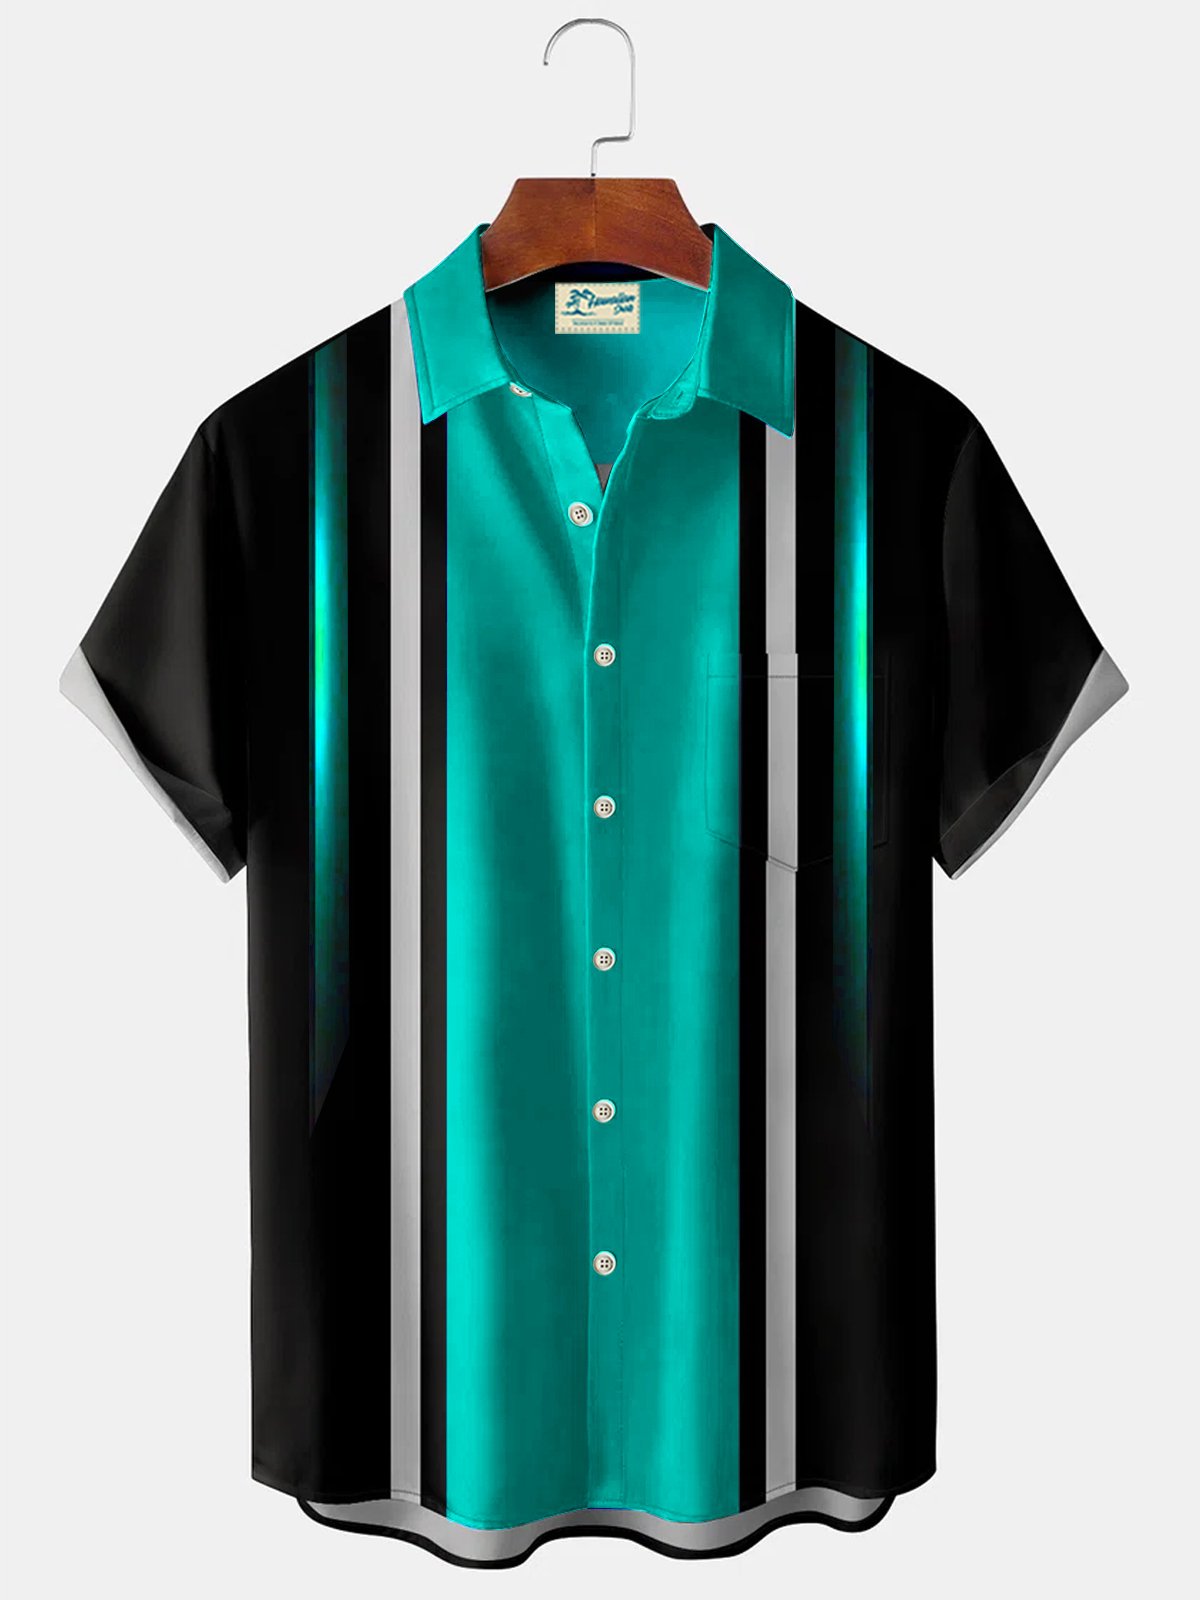 Royaura Vintage 50s Gradient Stripe Bowling Shirt Custom Bowling Jersey